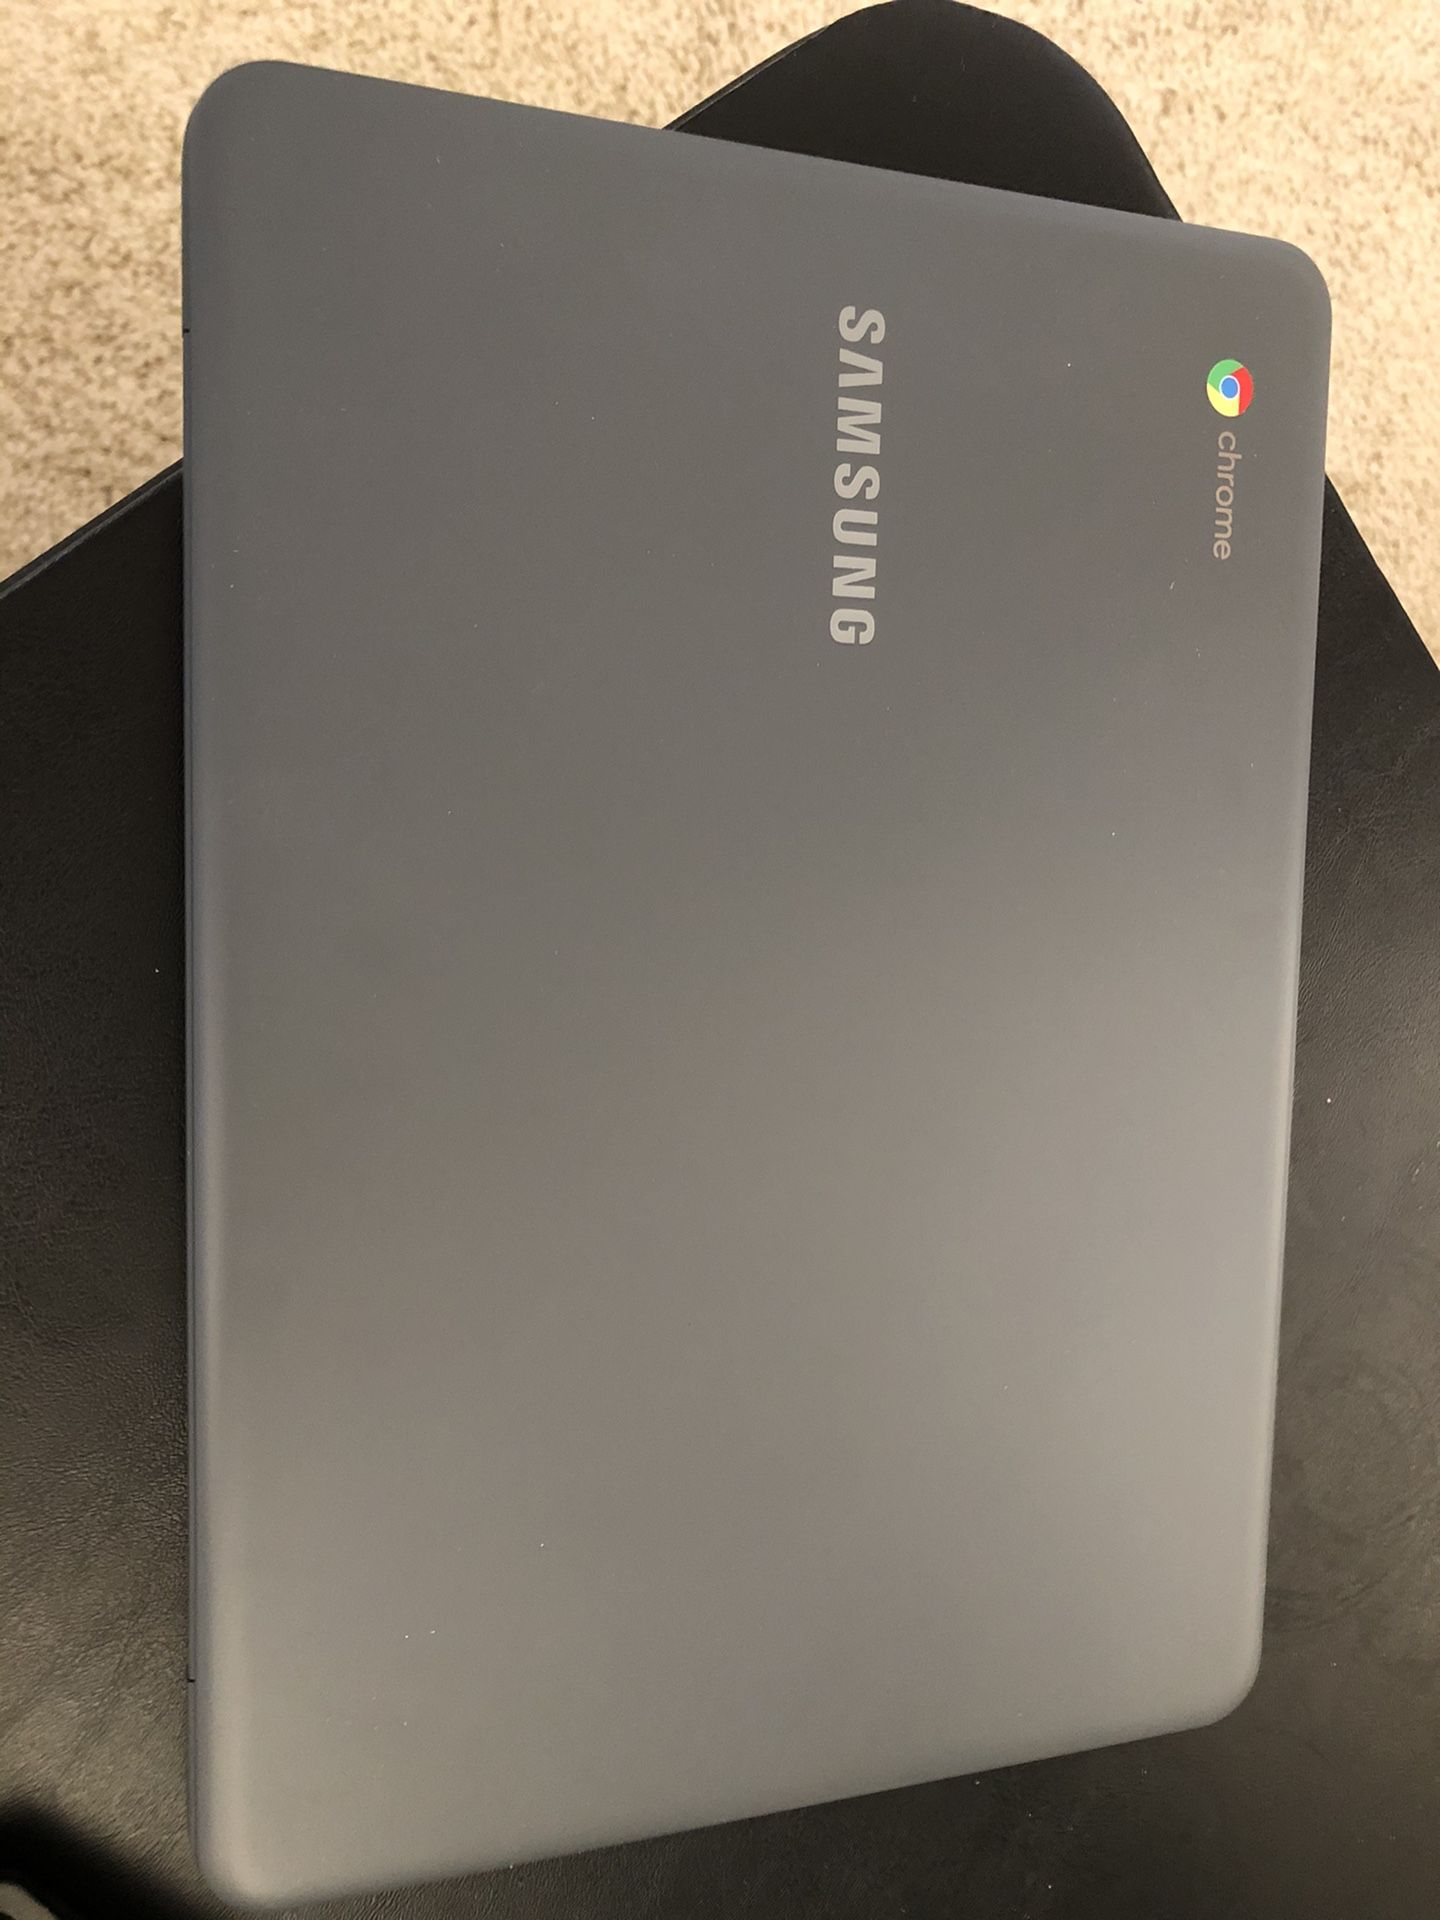 Samsung Chromebook 11.6 inch display